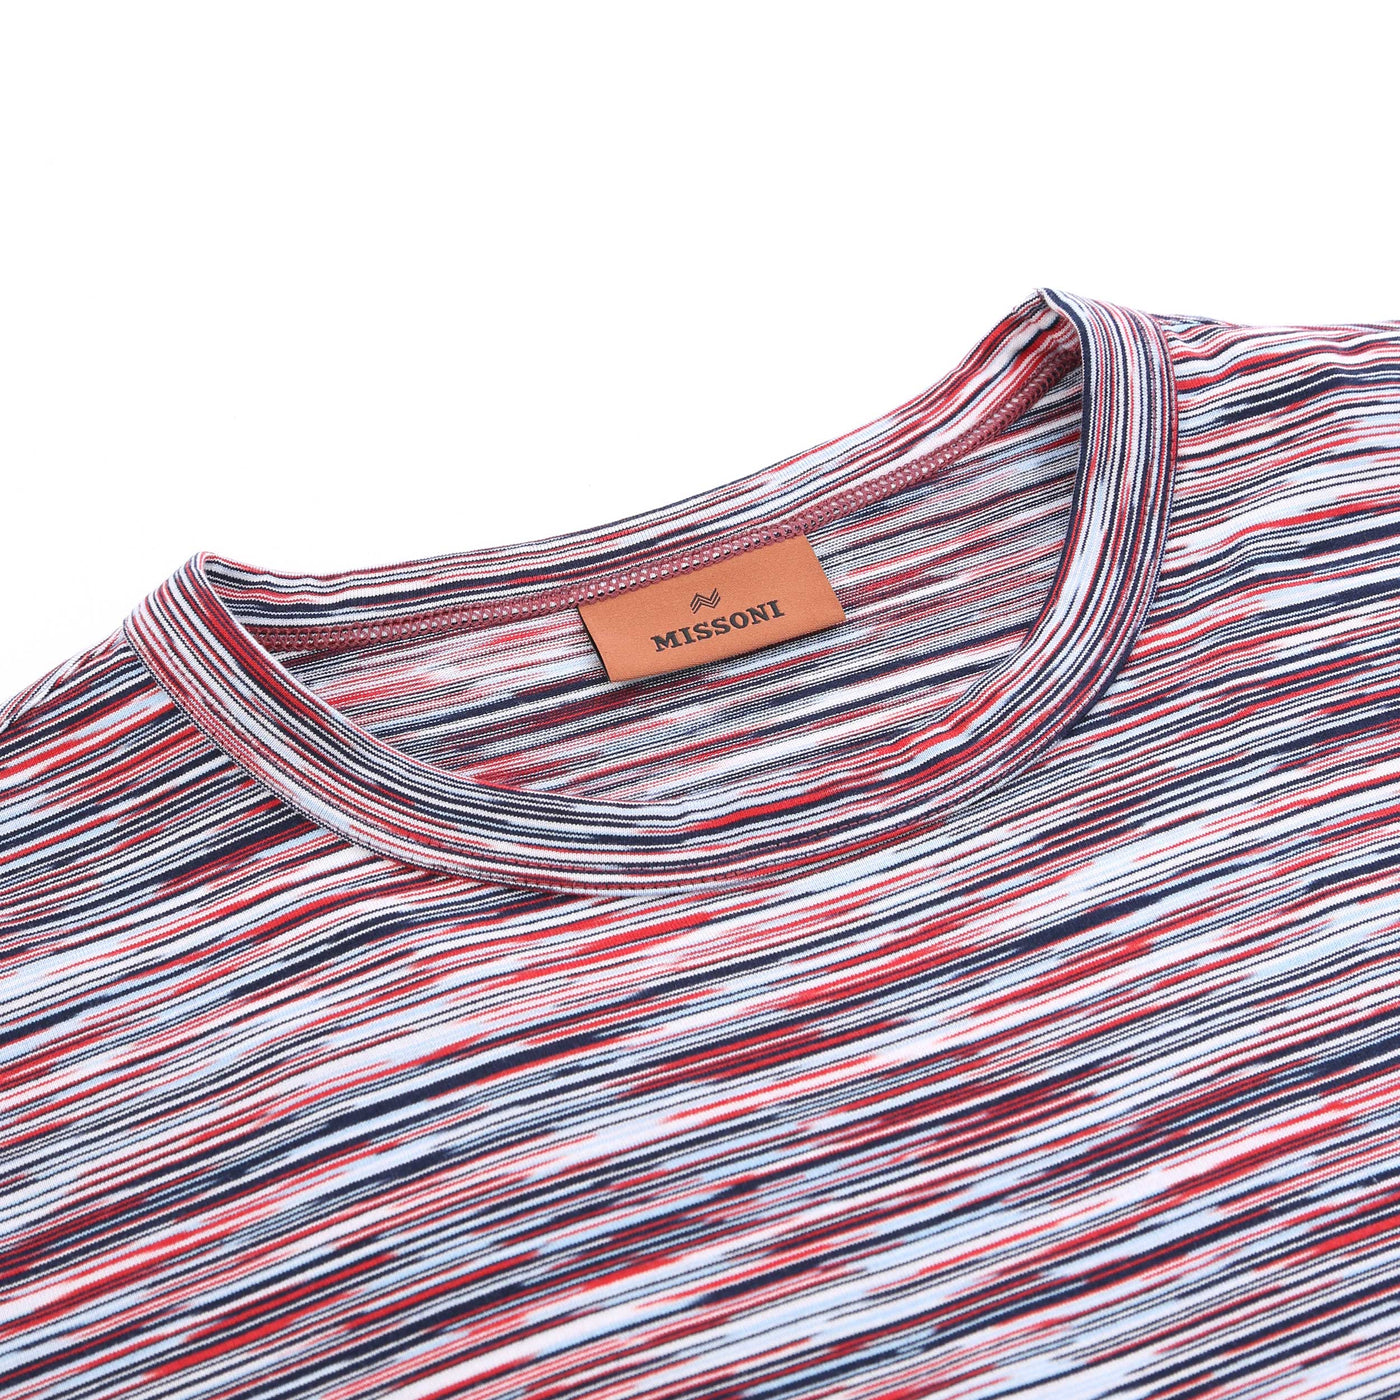 Missoni Space Dye Stripe T-Shirt in Navy, Red & Blue Neck